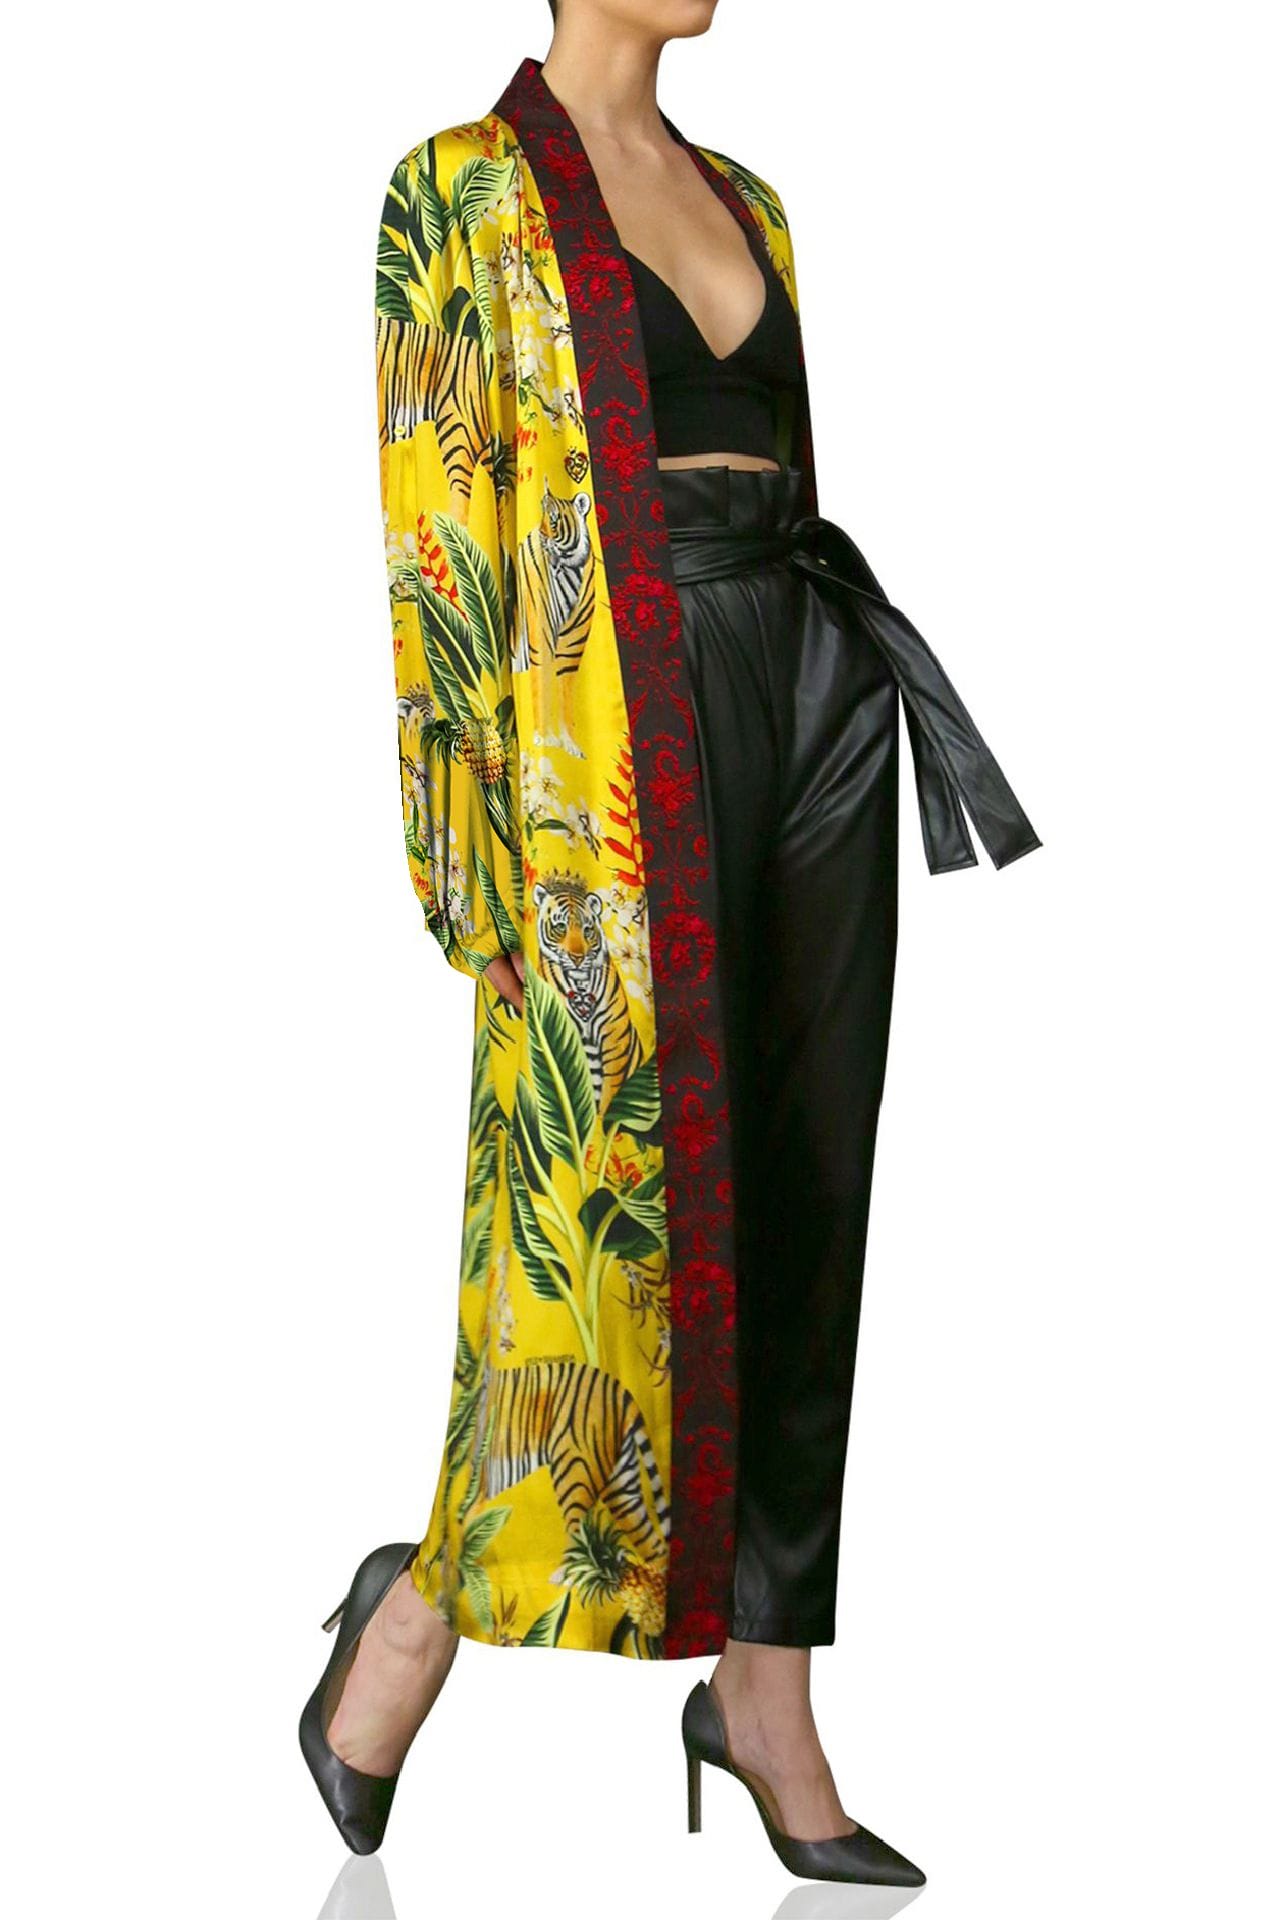 "yellow silk robe" "silk kimono robes for women" "Kyle X Shahida" "silk kimono womens"  "floral robe" "kimono silk robe women's"